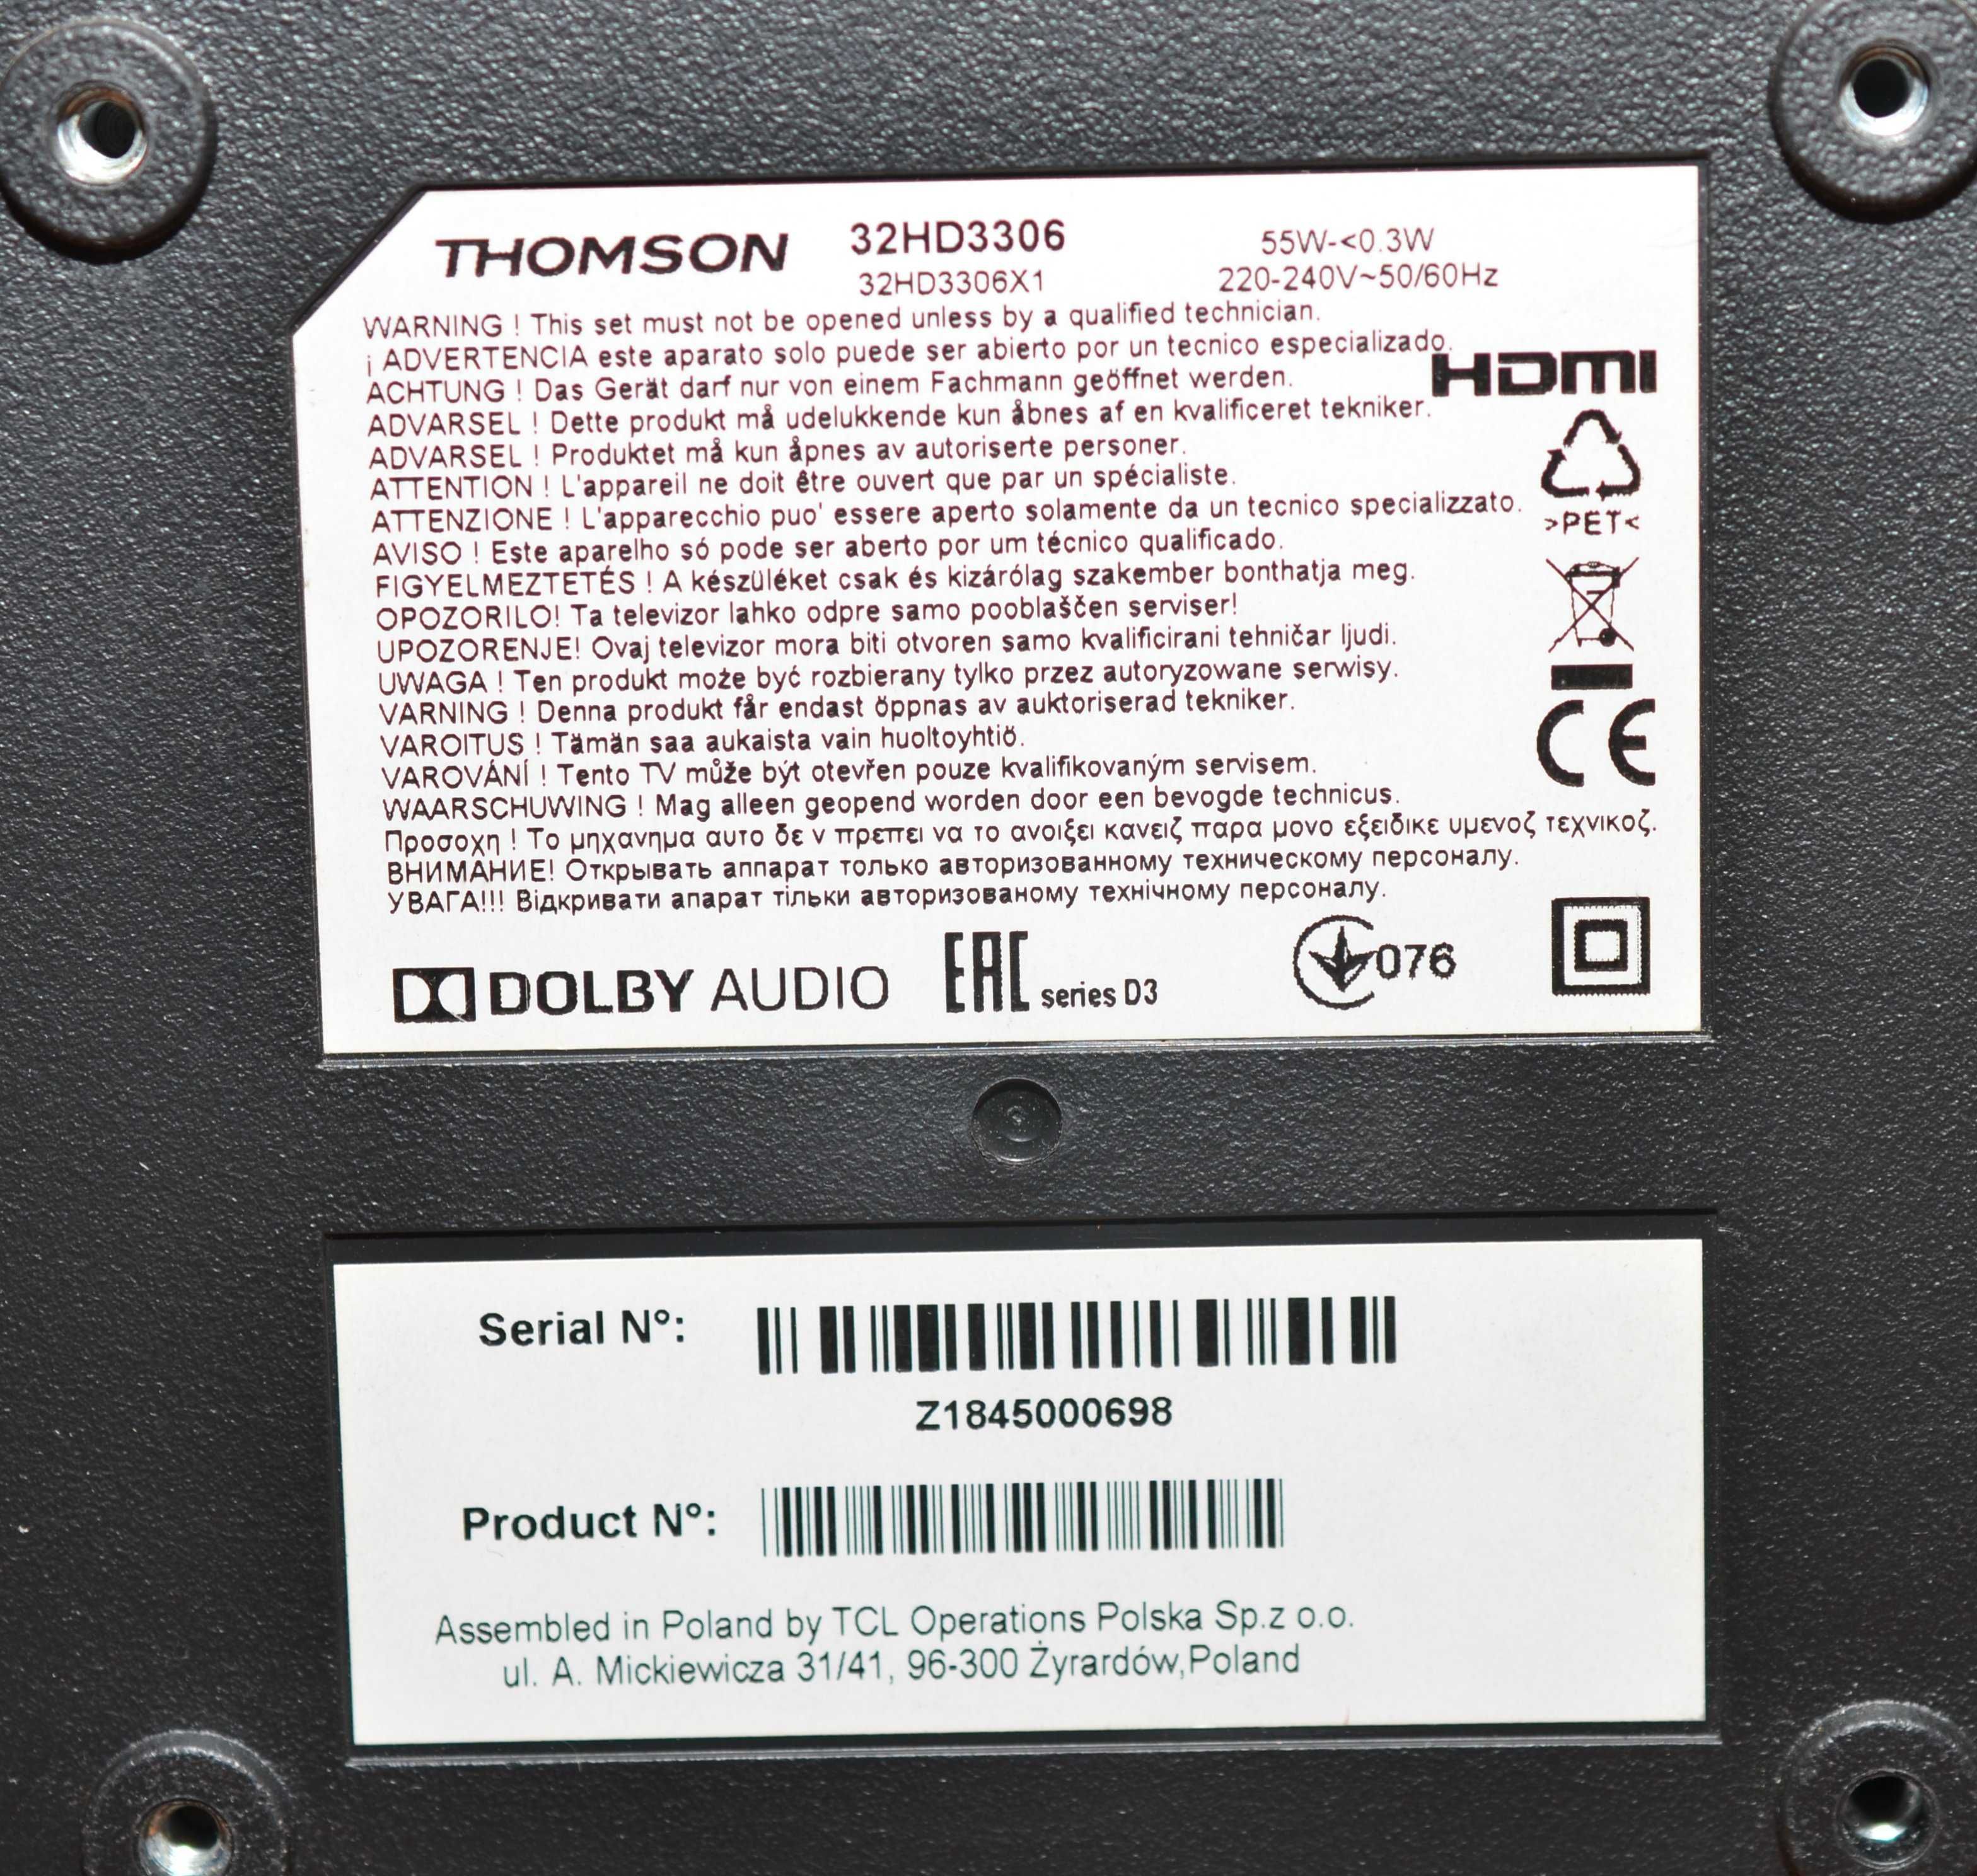 Thomson 32HD3306 telewizor 32" cale LED HD + pilot